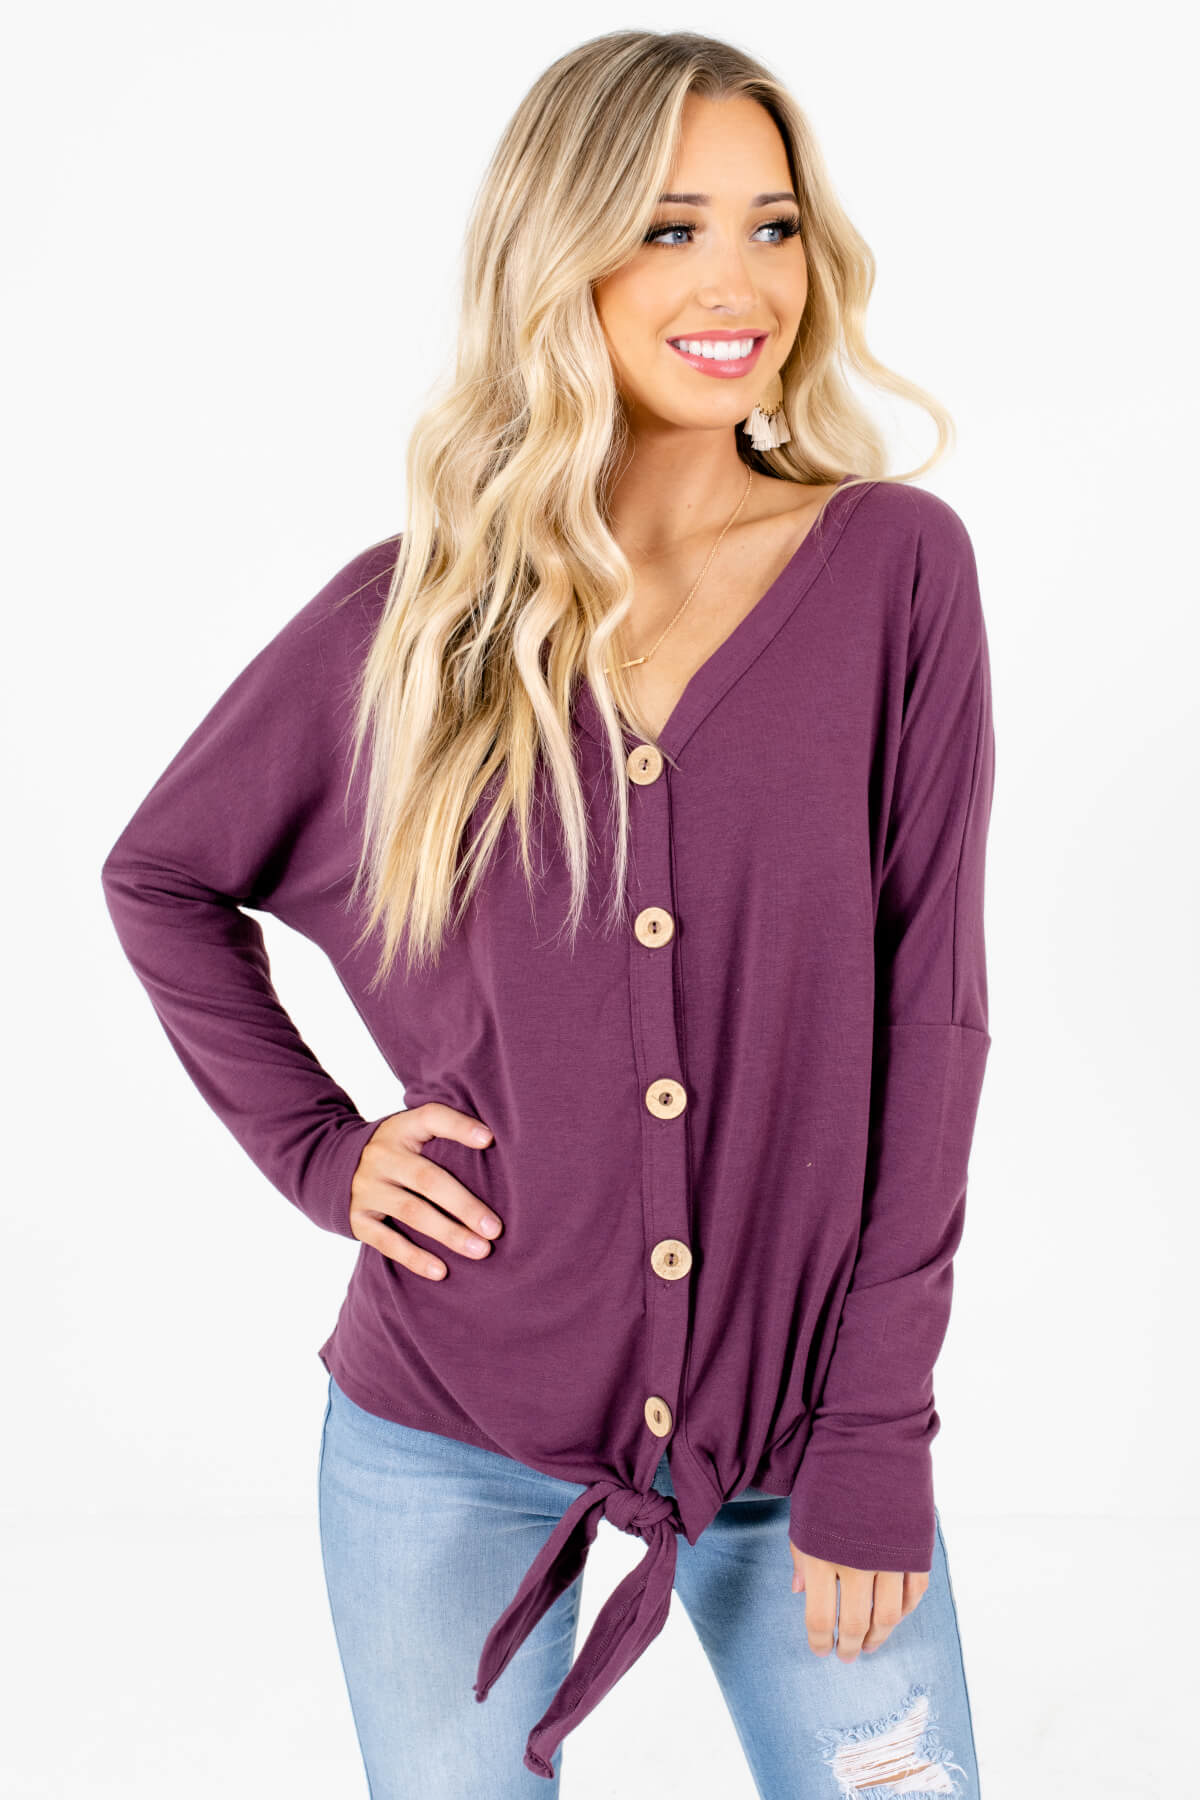 Women’s Purple V-Neckline Boutique Tops